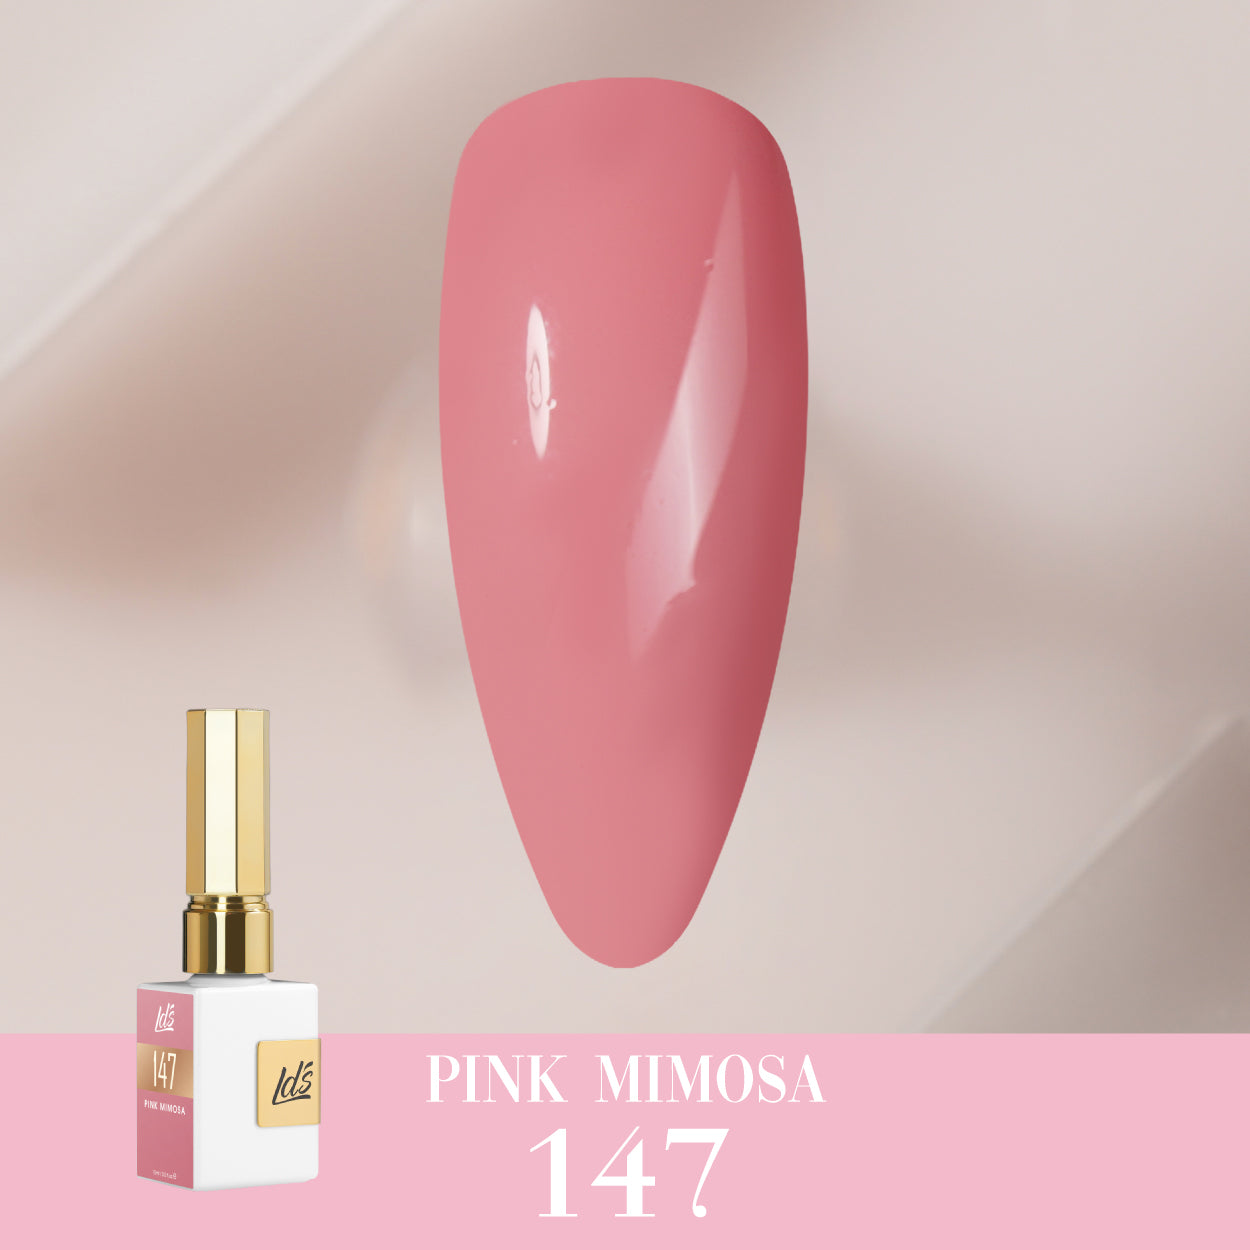 LDS Color Craze Collection - 147 Pink Mimosa - Gel Polish 0.5oz